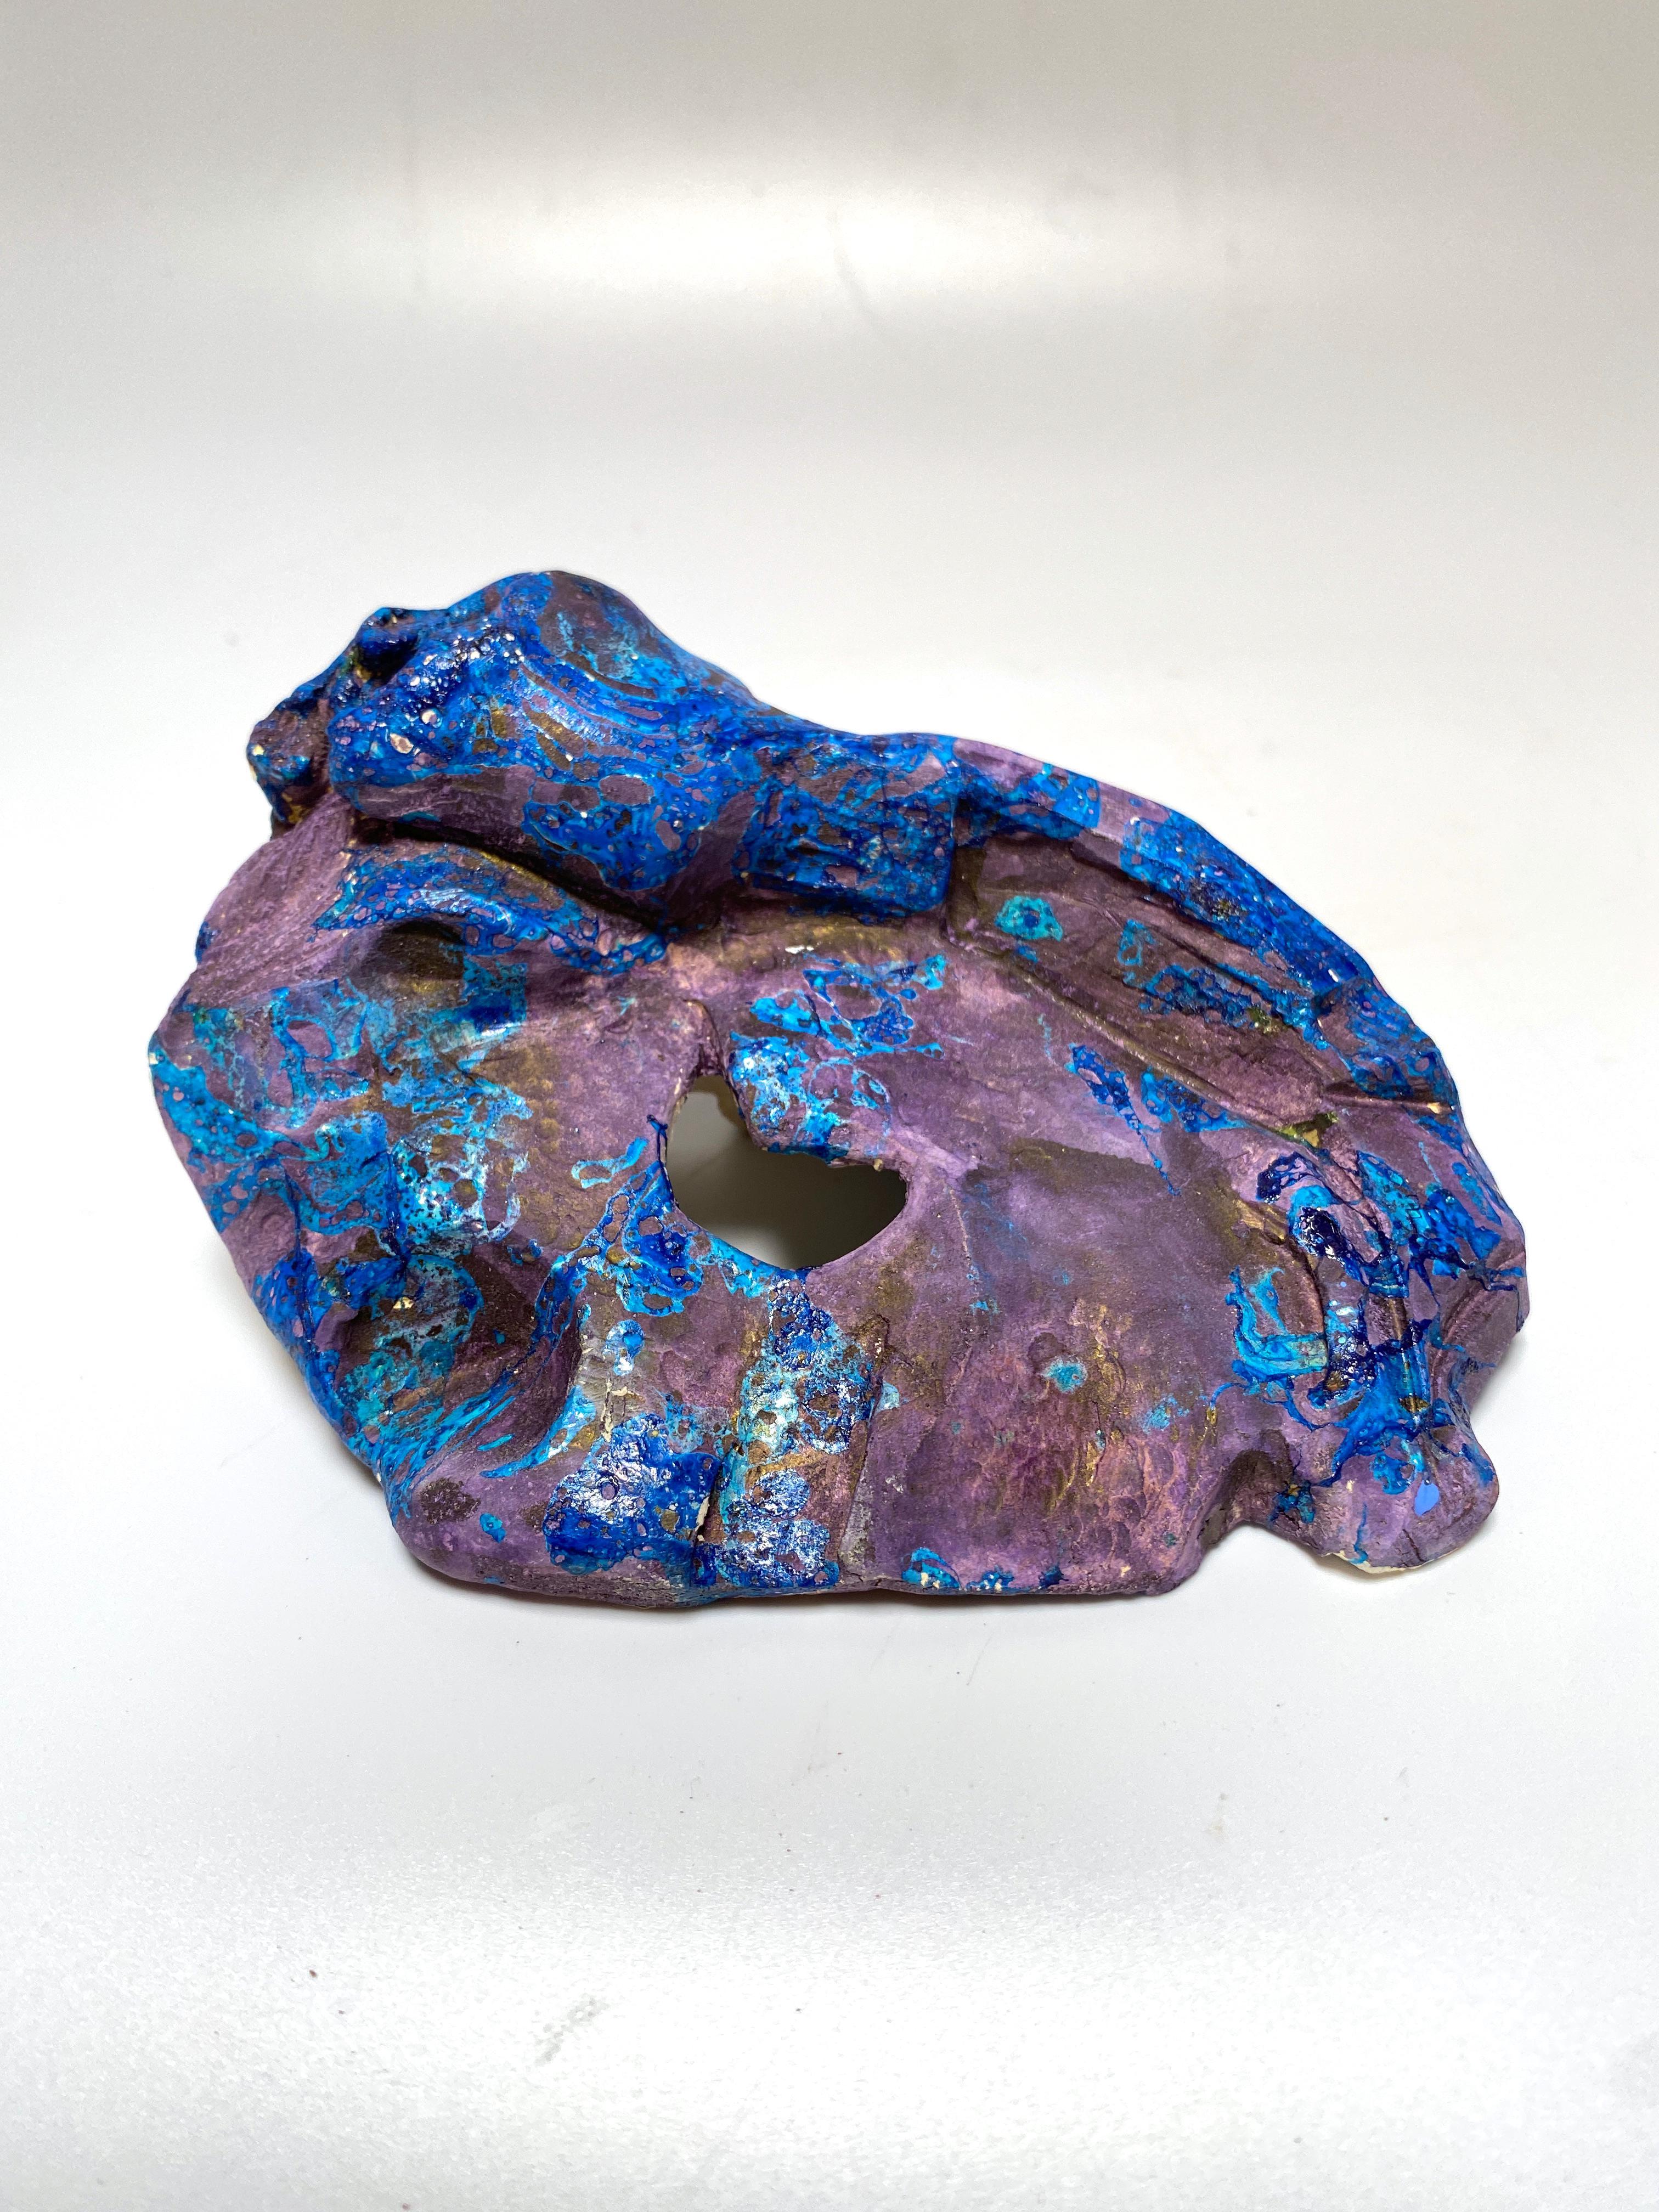 Artist: Justin Siegel
Title: Untitled ( purple/blue )
Medium: Underglaze and ink on ceramic pottery
Size: 6 x 3 1/2  x 3 inches
Year: 2021